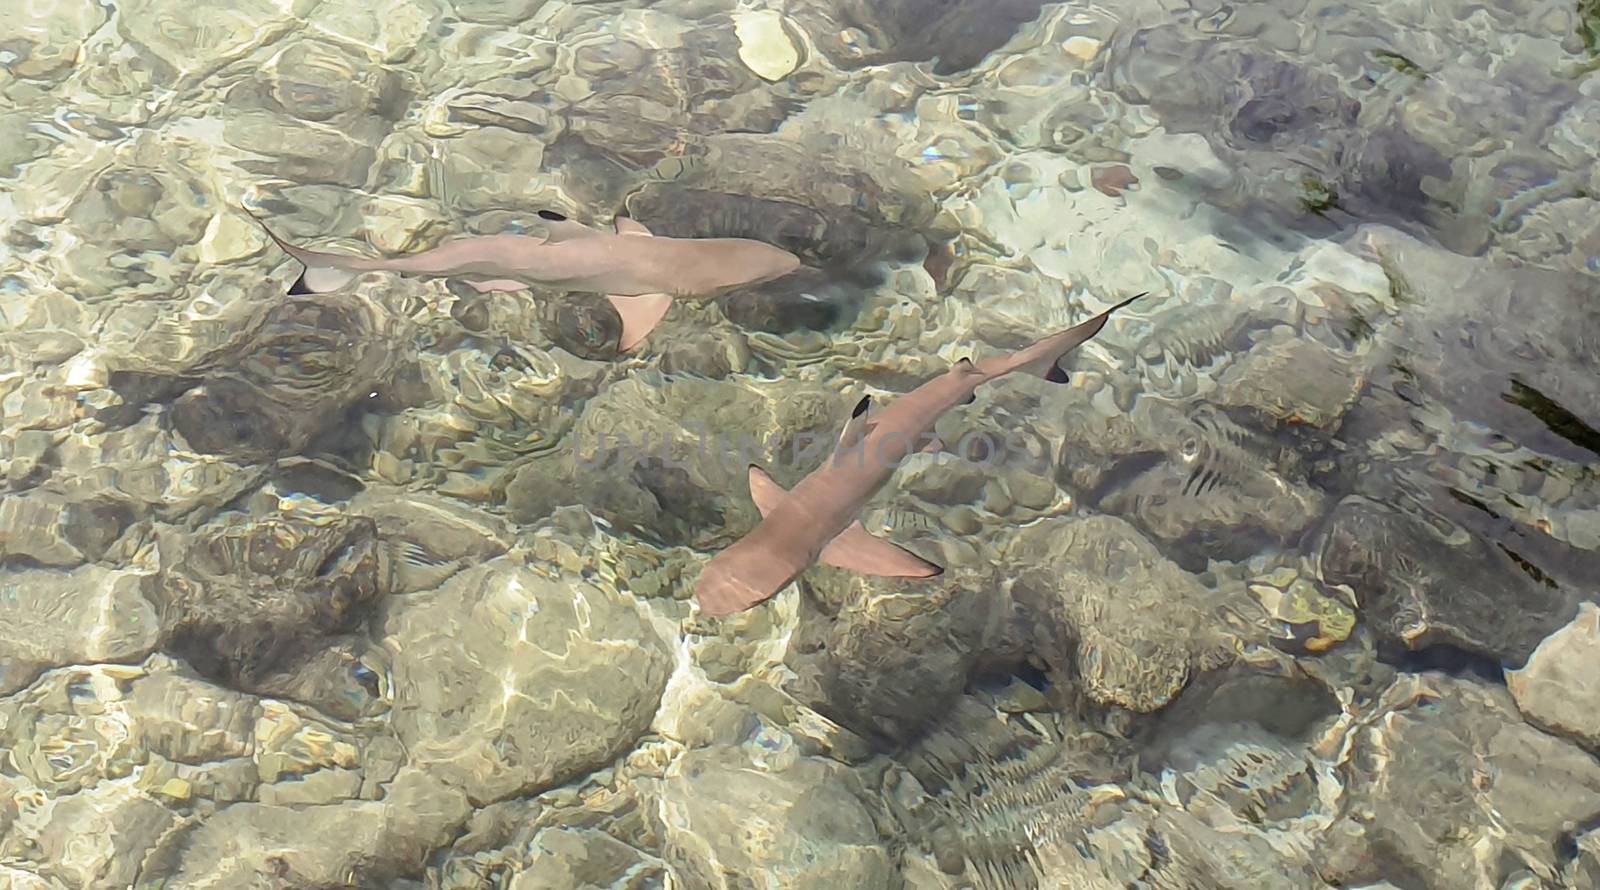 Grey reef sharks swim in shallow water by mdsfotograf